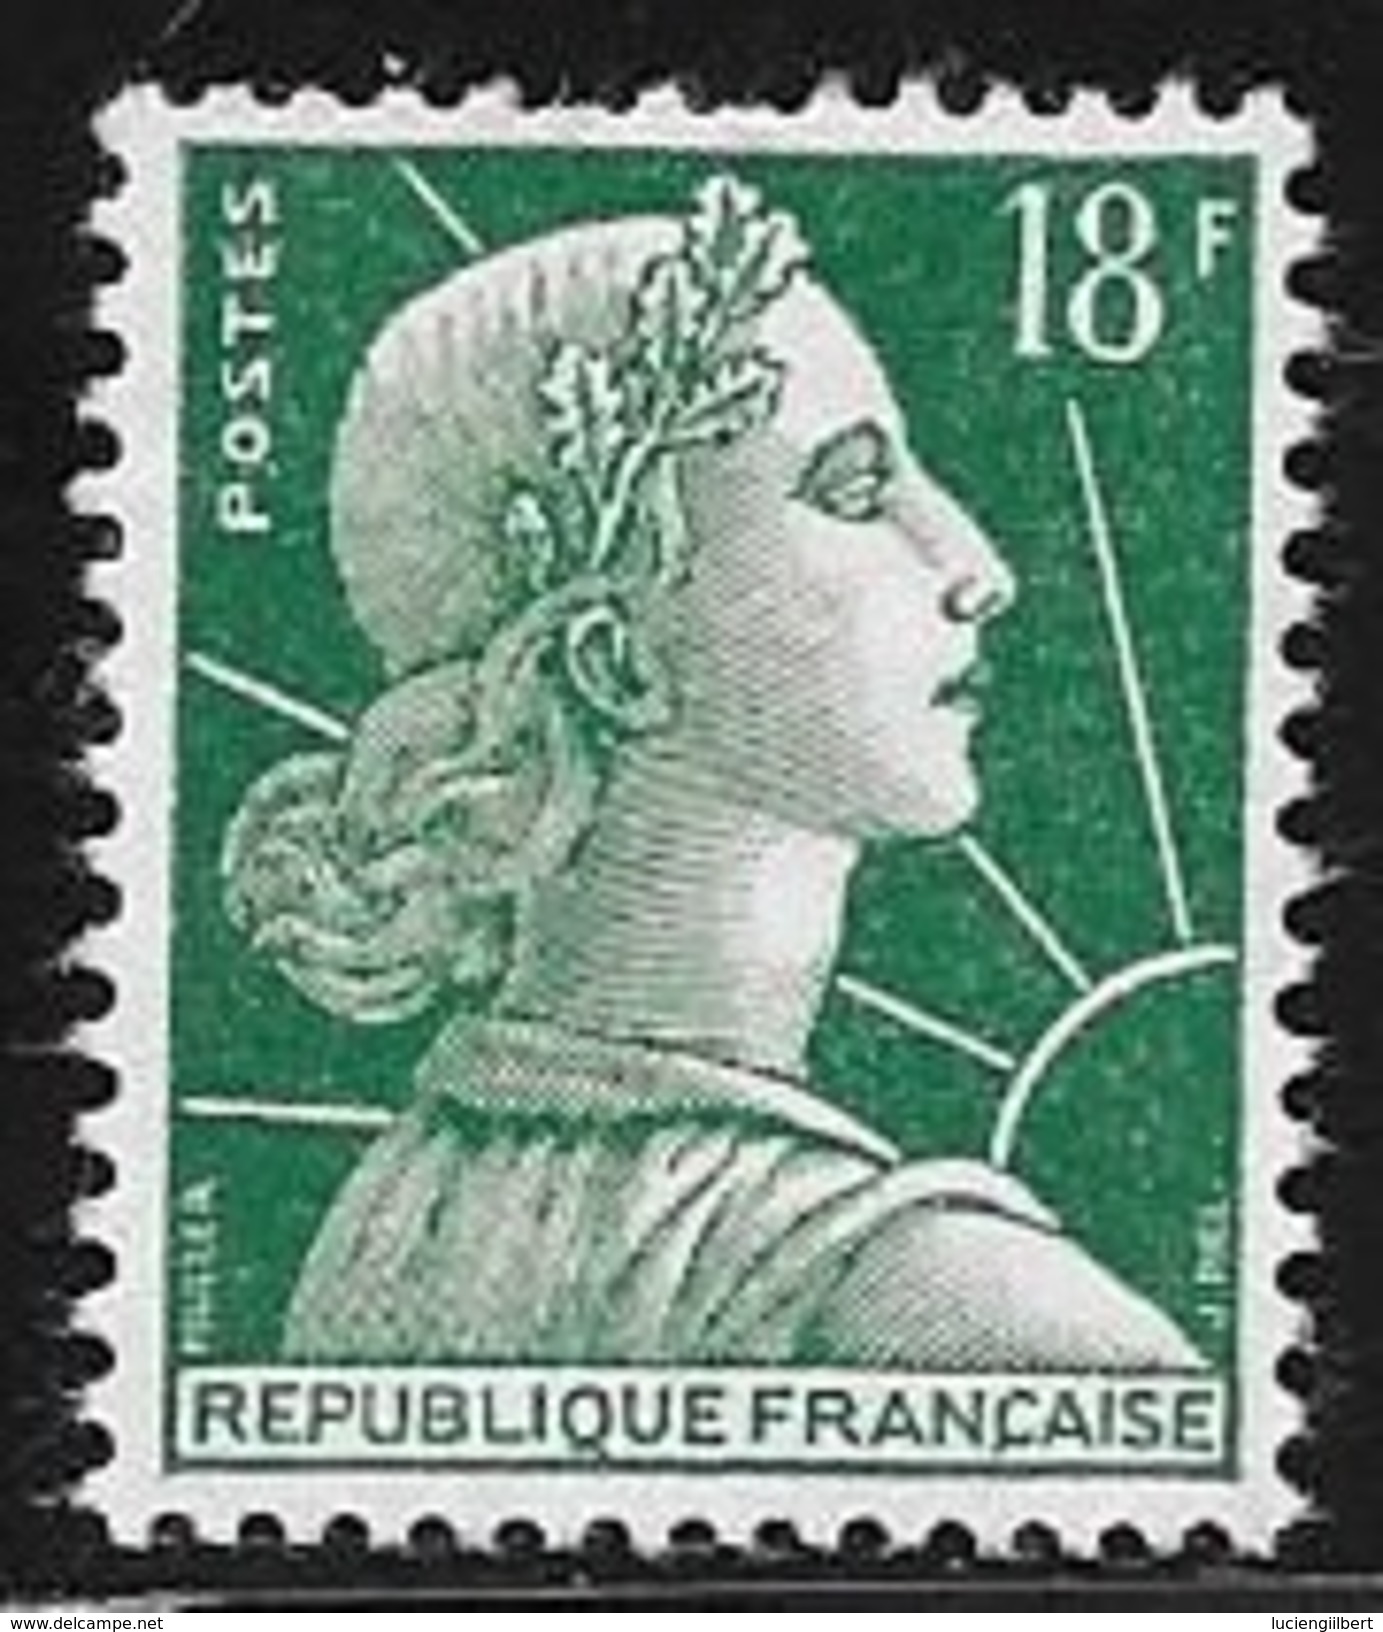 N° 1011 A     FRANCE  -  NEUF  -  18 F   MARIANNE DE MULLER   -  1955 - Unused Stamps